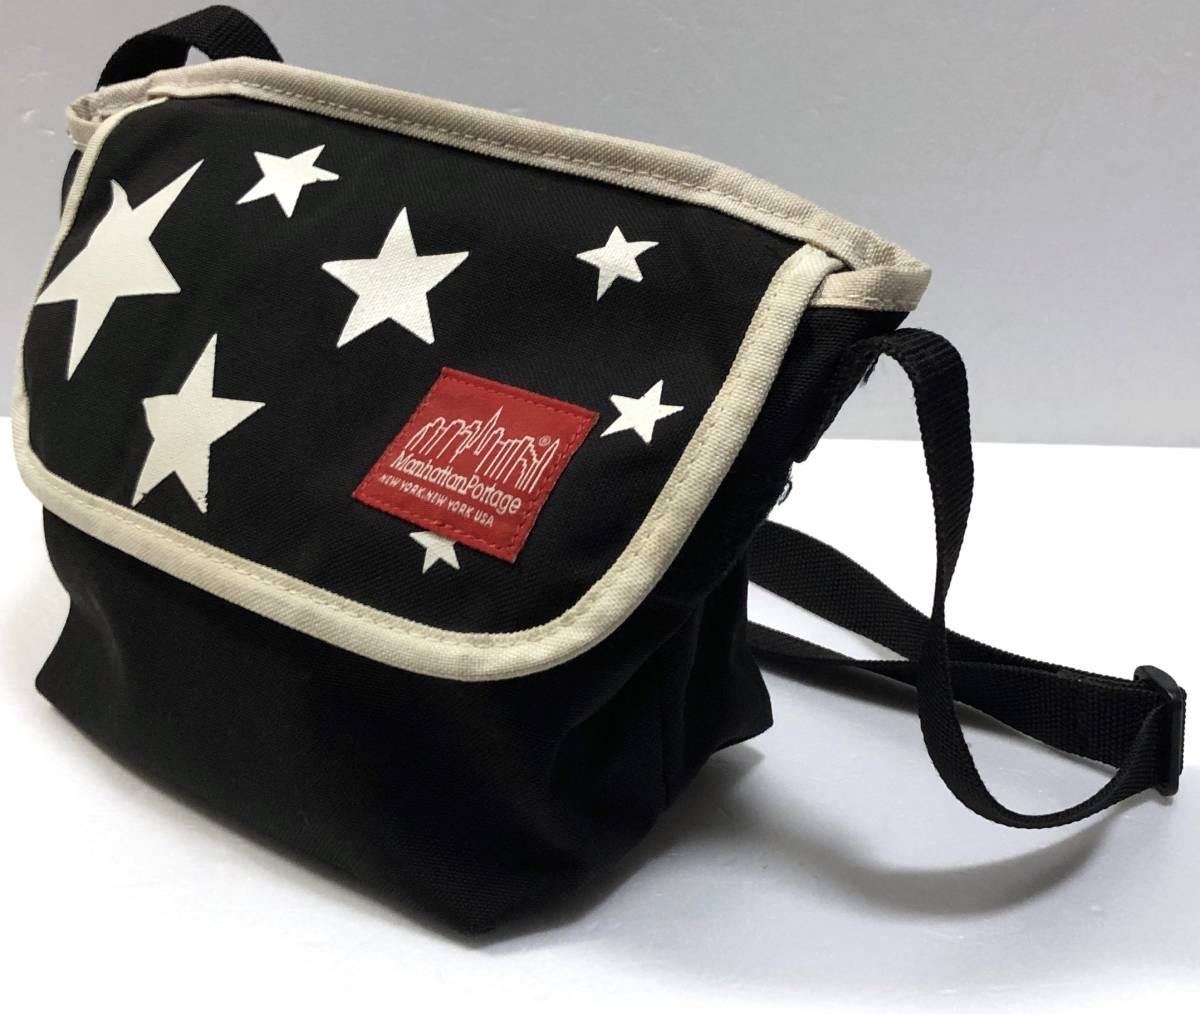  Manhattan Poe te-ji star pattern XS messenger bag black black white black 2307222